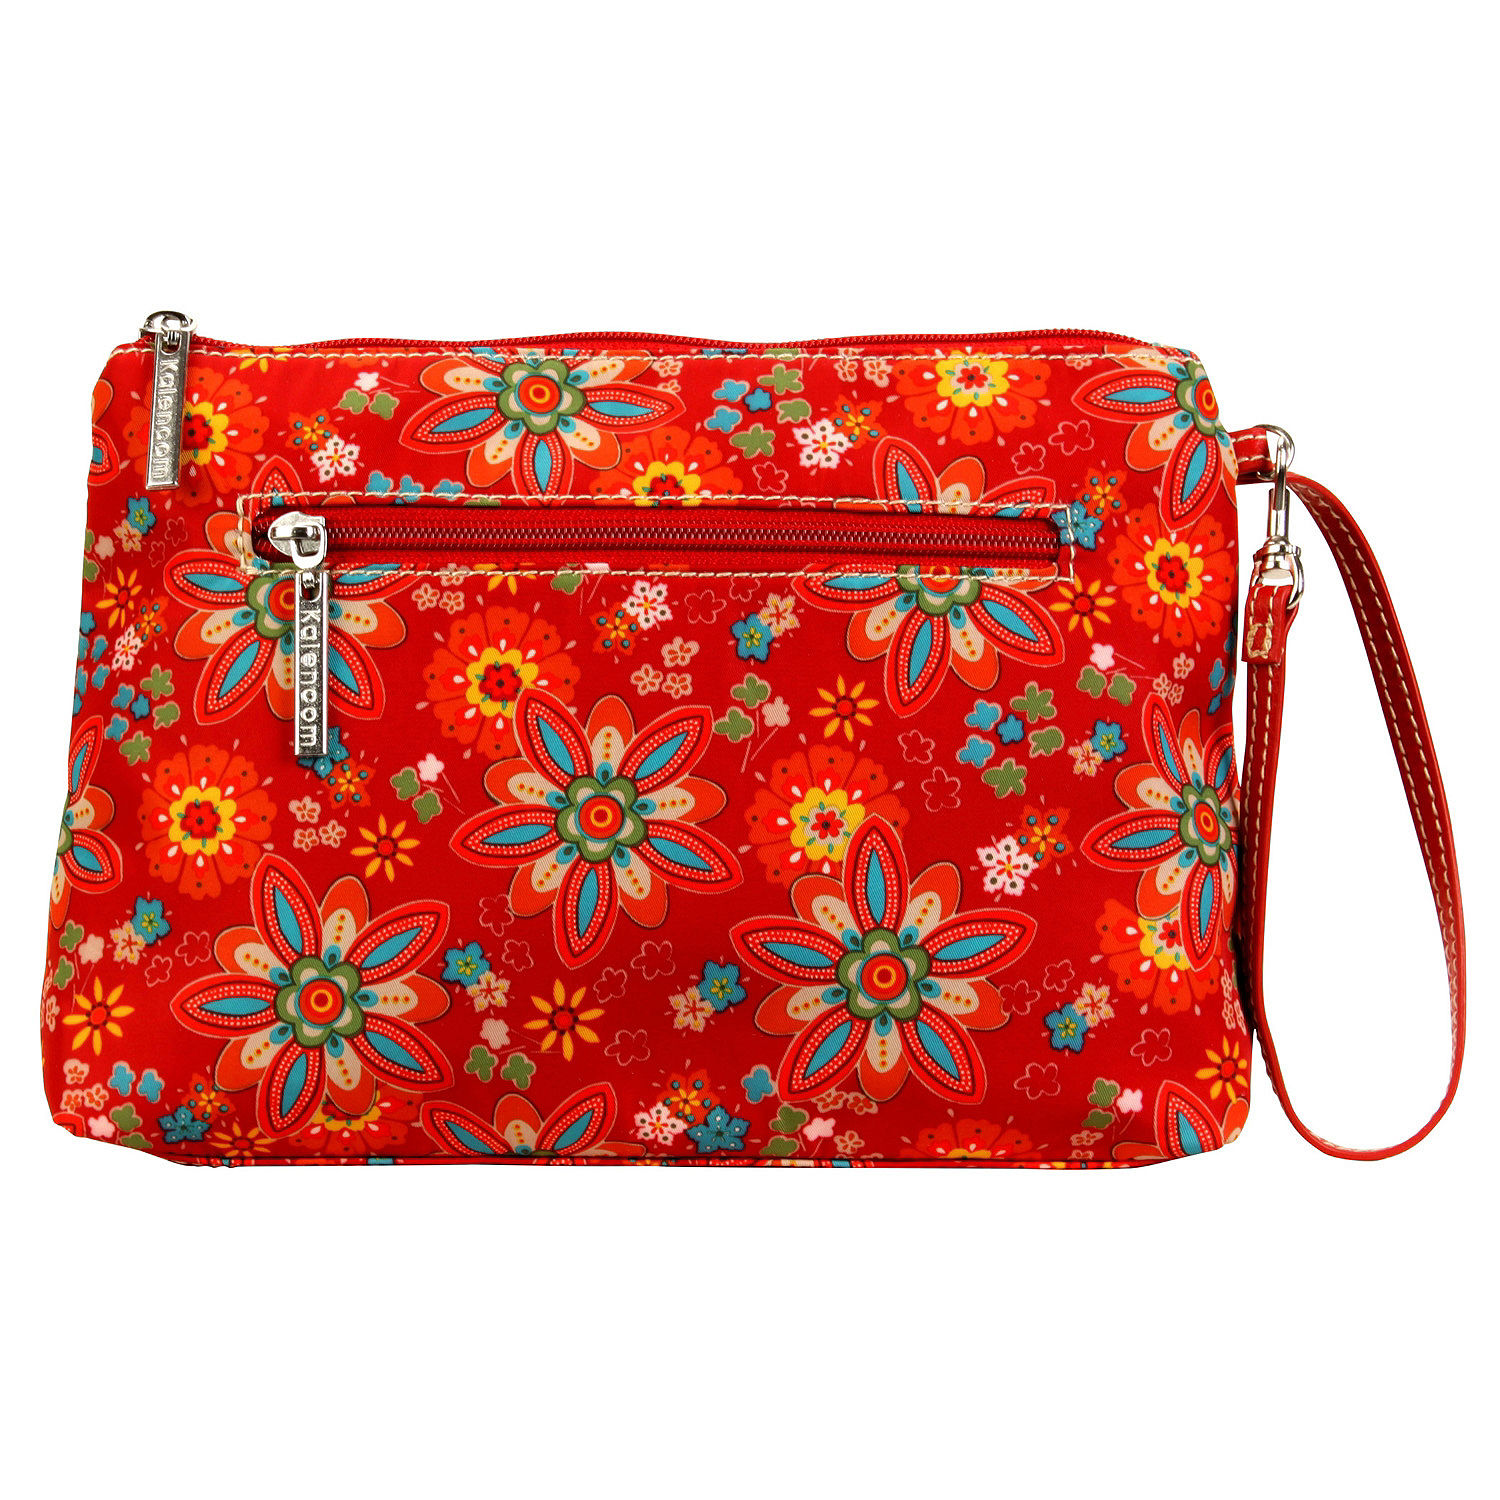 Kalencom Diaper Bag, Color: Red - JCPenney